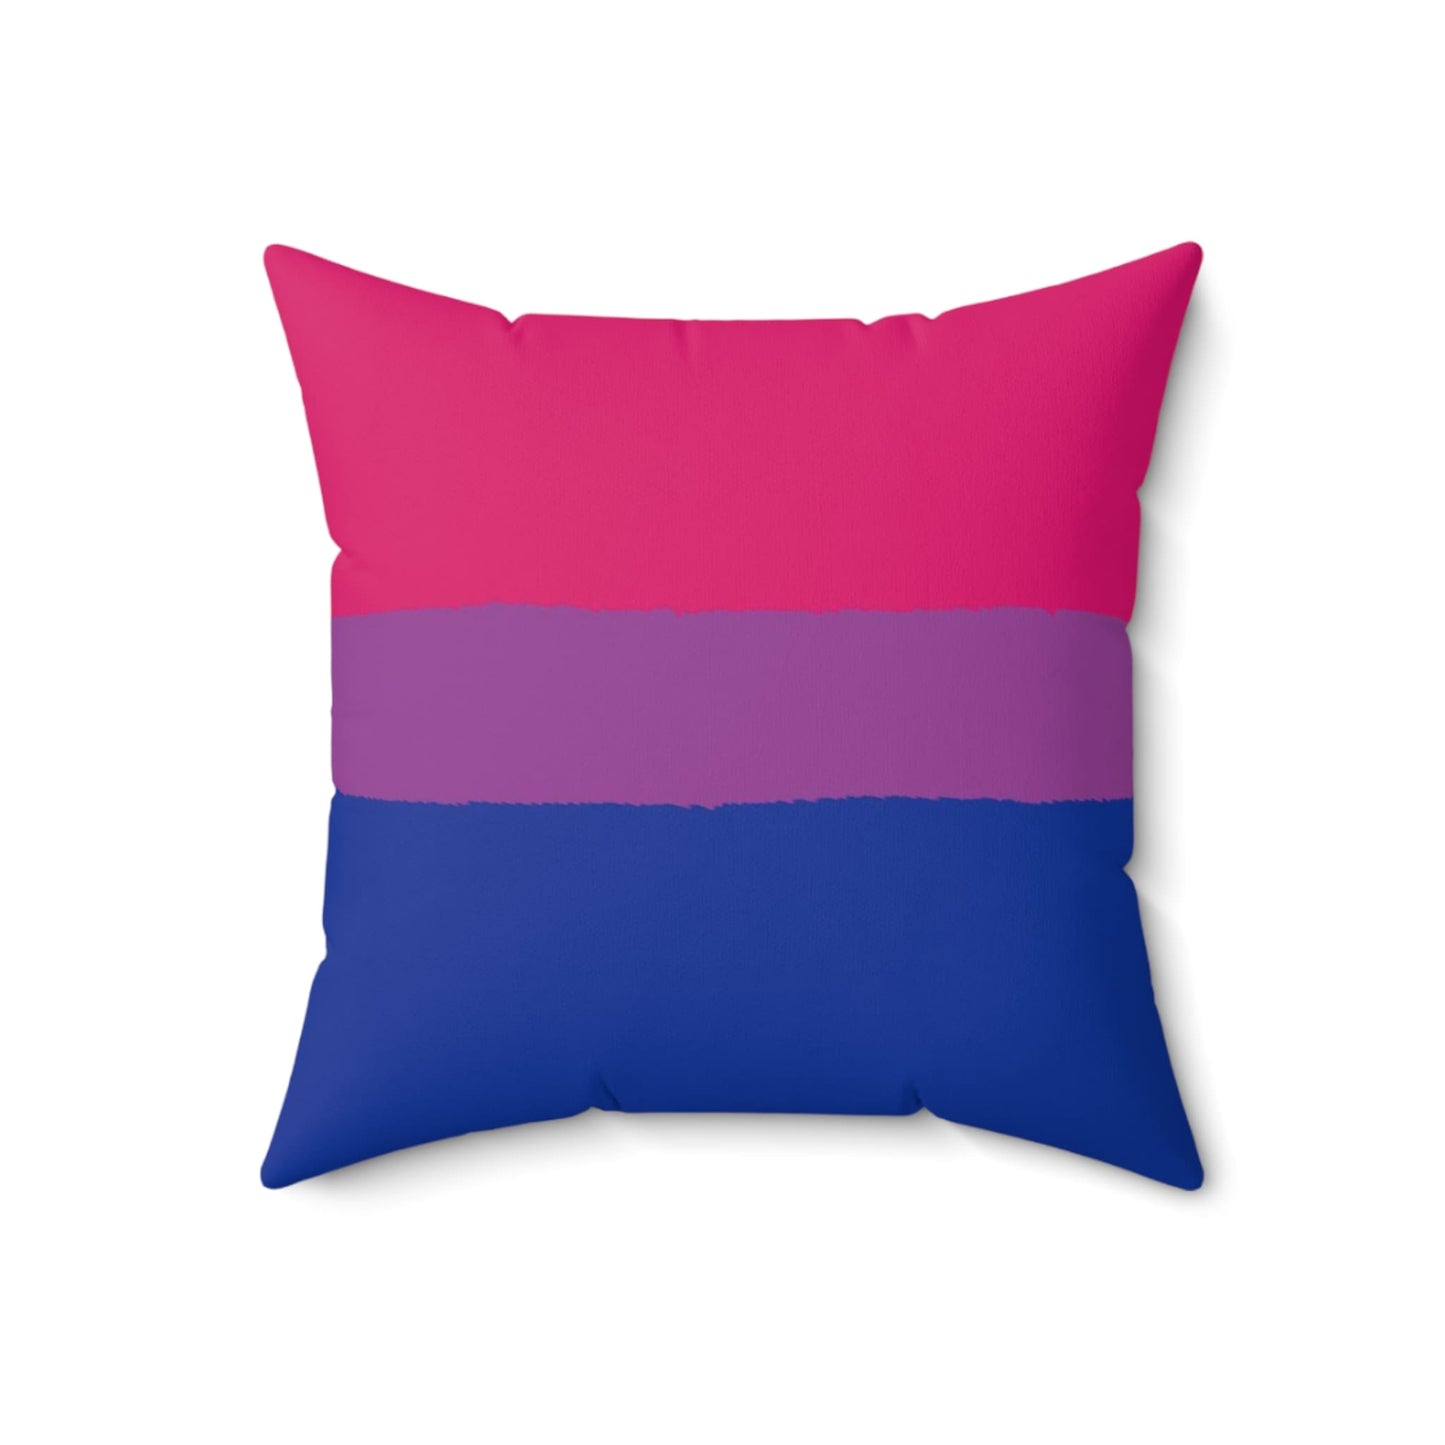 bisexual pillow flatlay